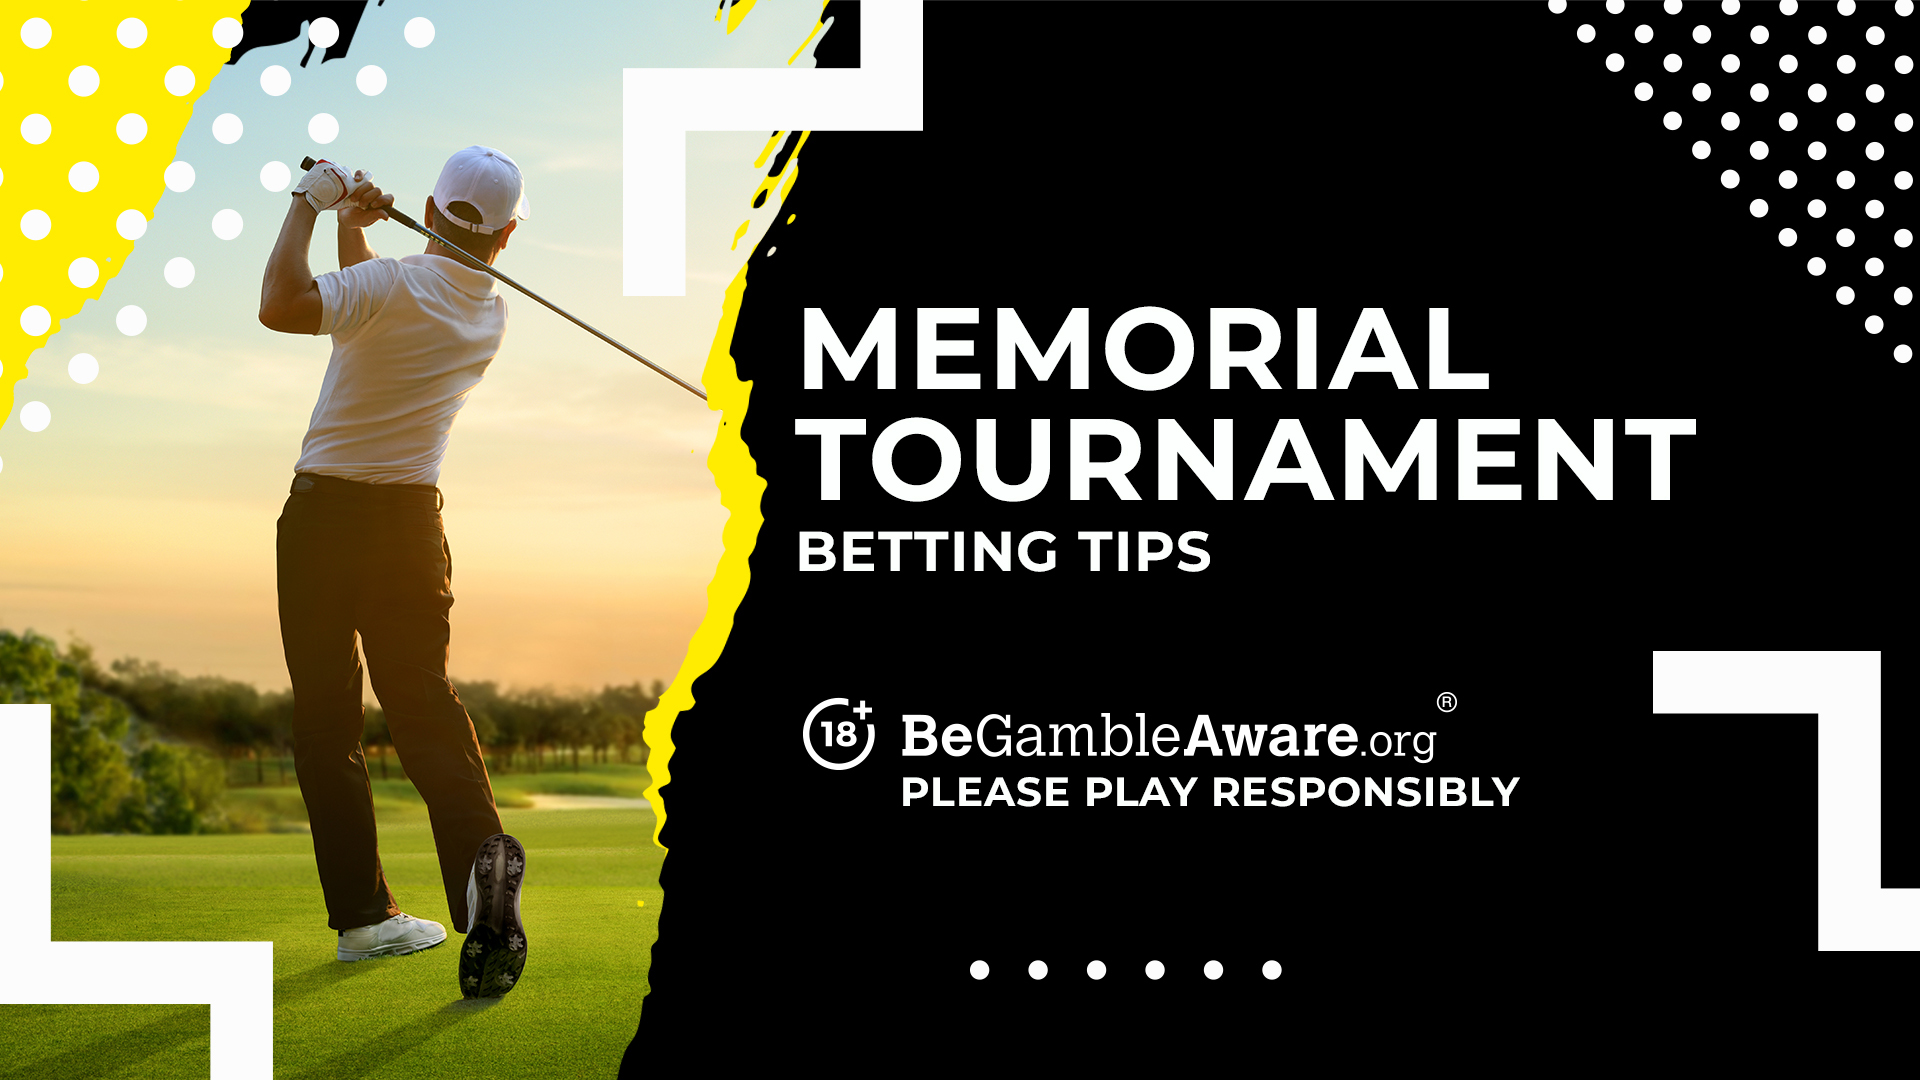 Photo: memorial golf tournament betting tips